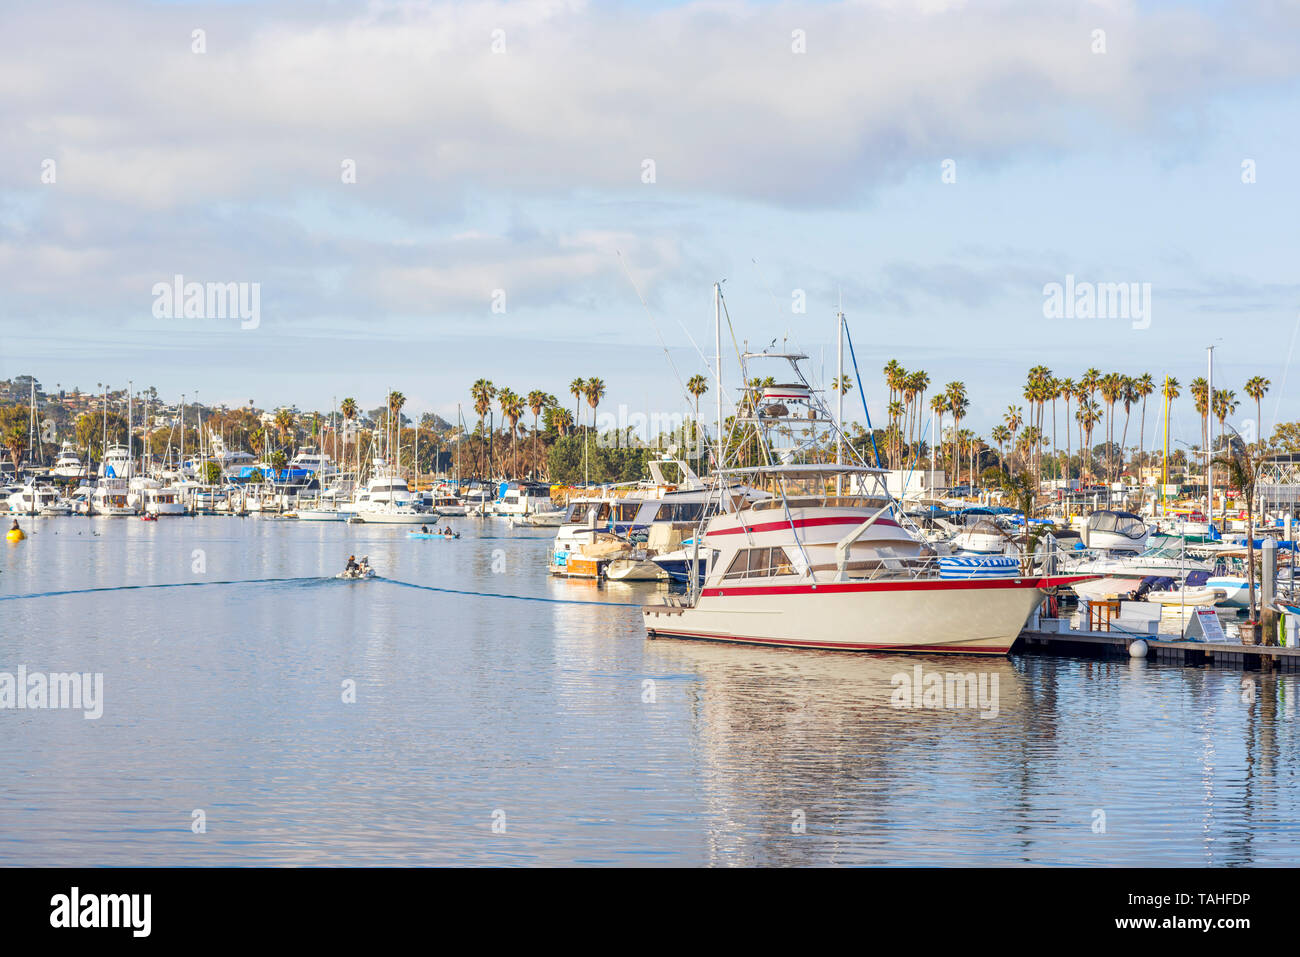 Barca marina at Mission Bay. San Diego, California, Stati Uniti d'America. Foto Stock